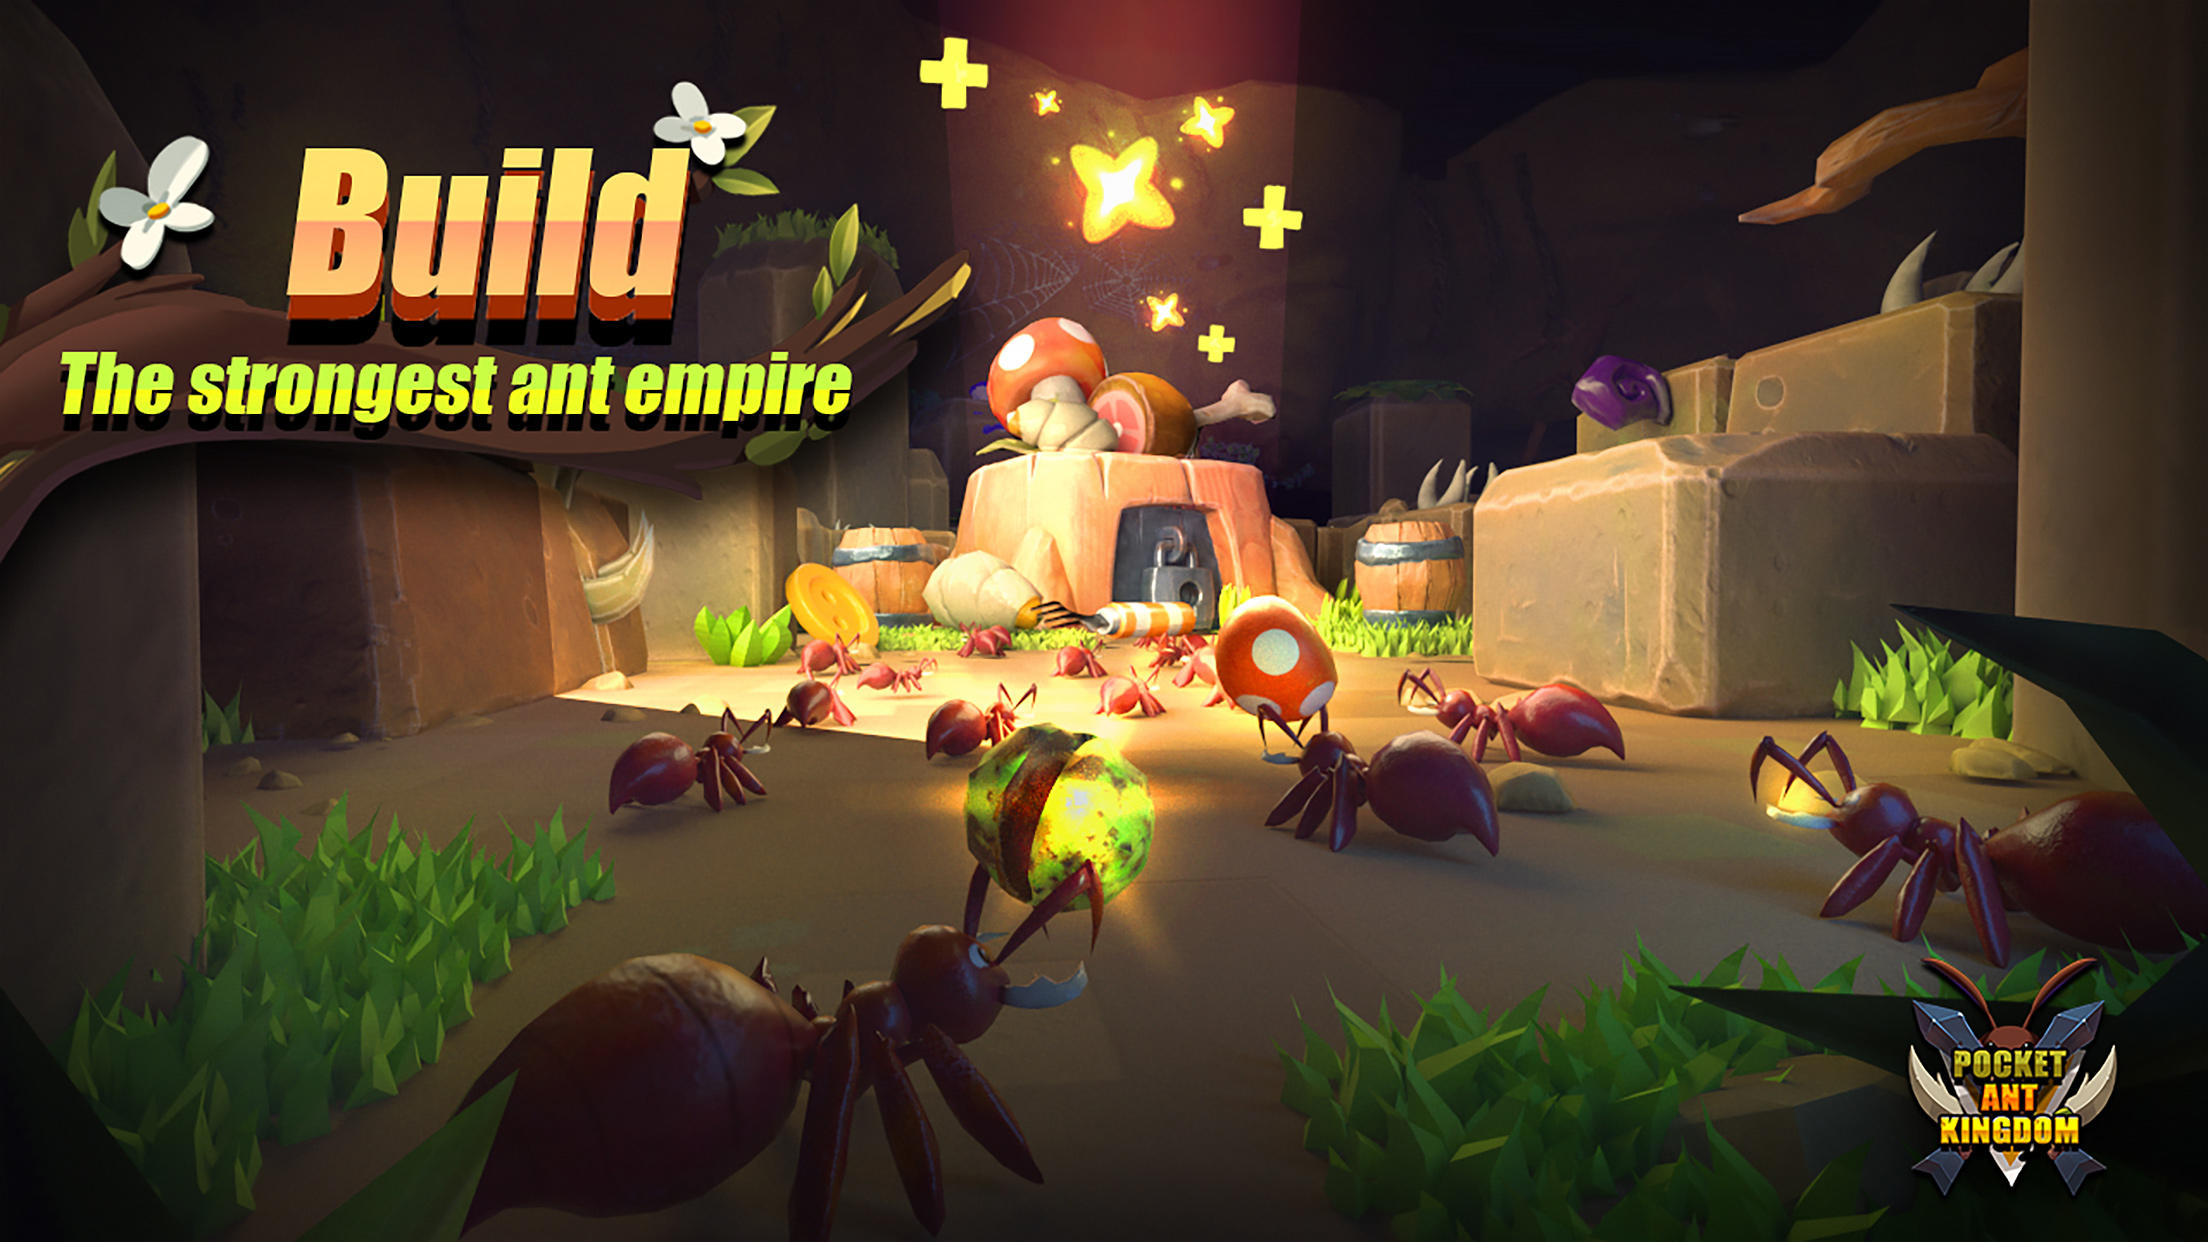 Pocket Ant Kingdom screenshot game